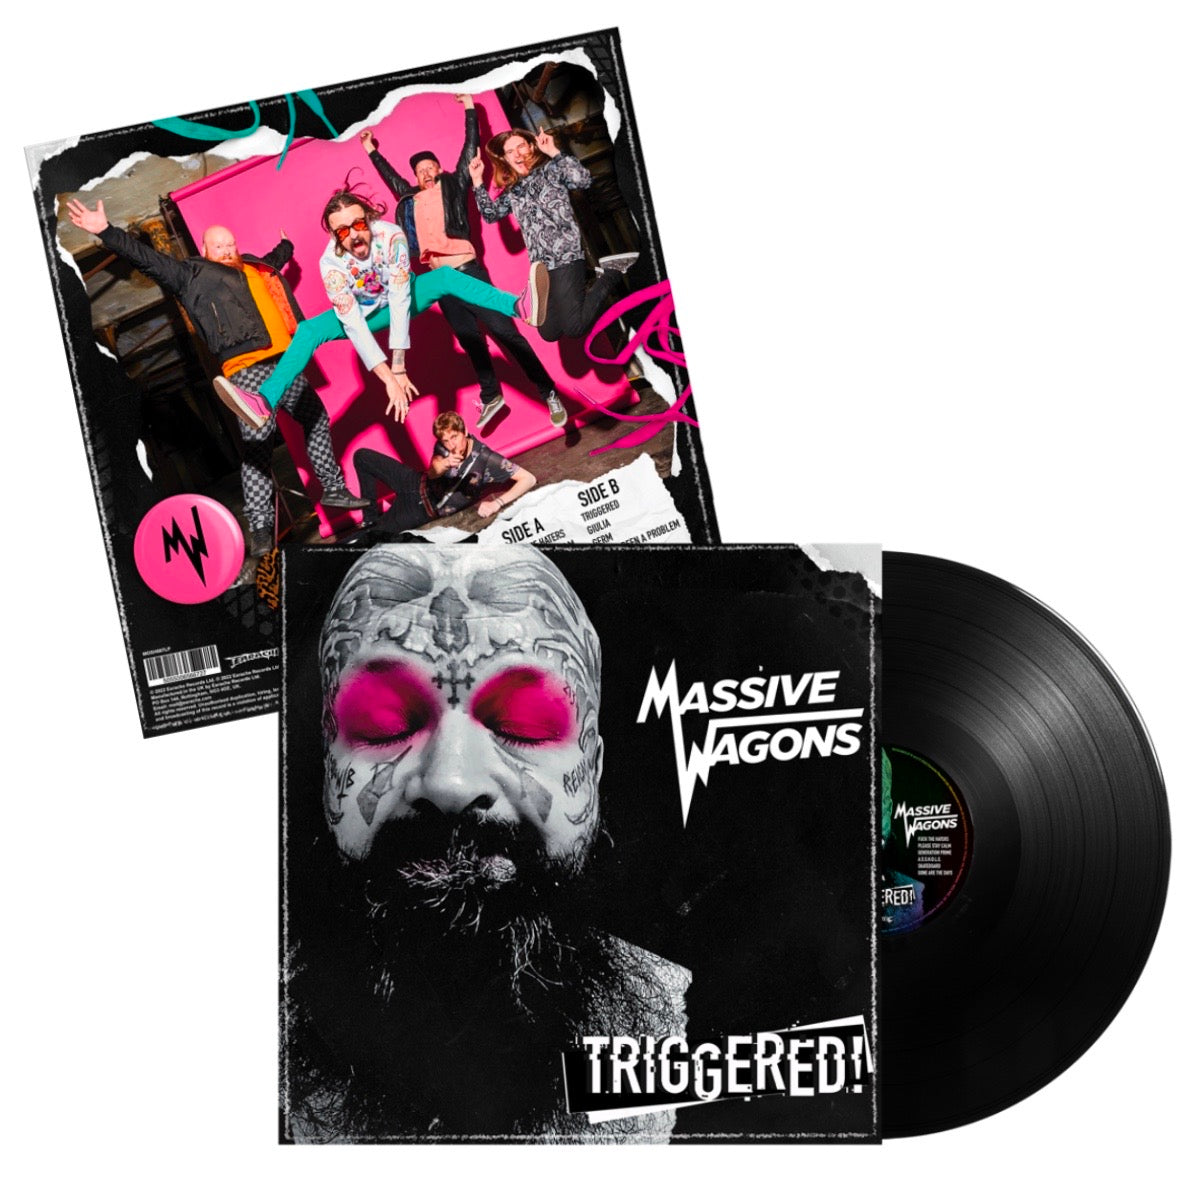 Massive Wagons "TRIGGERED!" Black Vinyl w/ Jump Back Cover